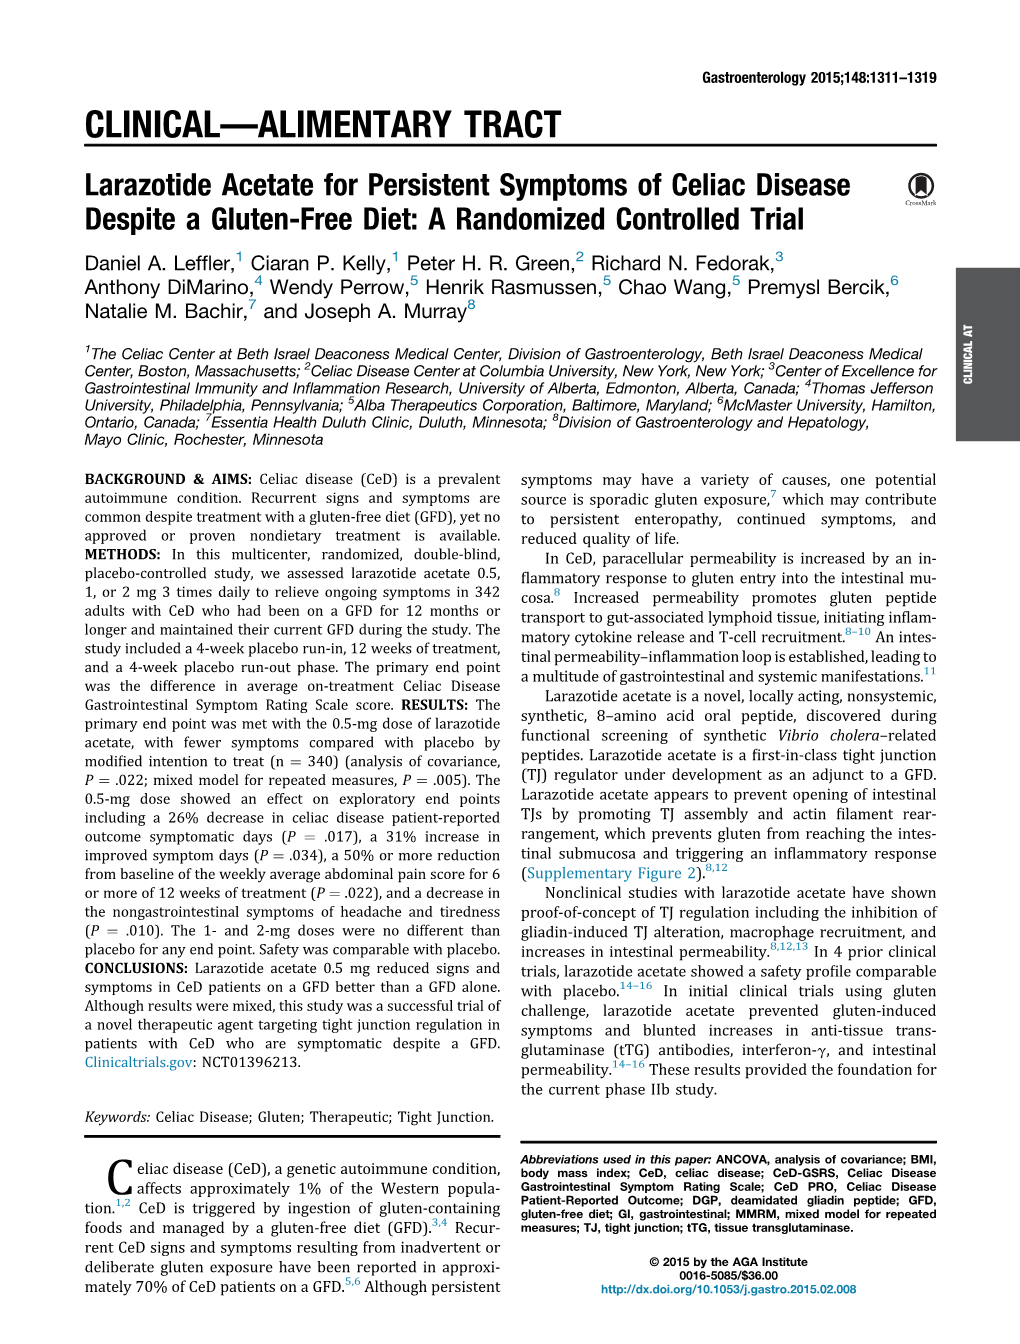 Larazotide Acetate for Persistent Symptoms of Celiac Disease Despite a Gluten-Free Diet: a Randomized Controlled Trial Daniel A